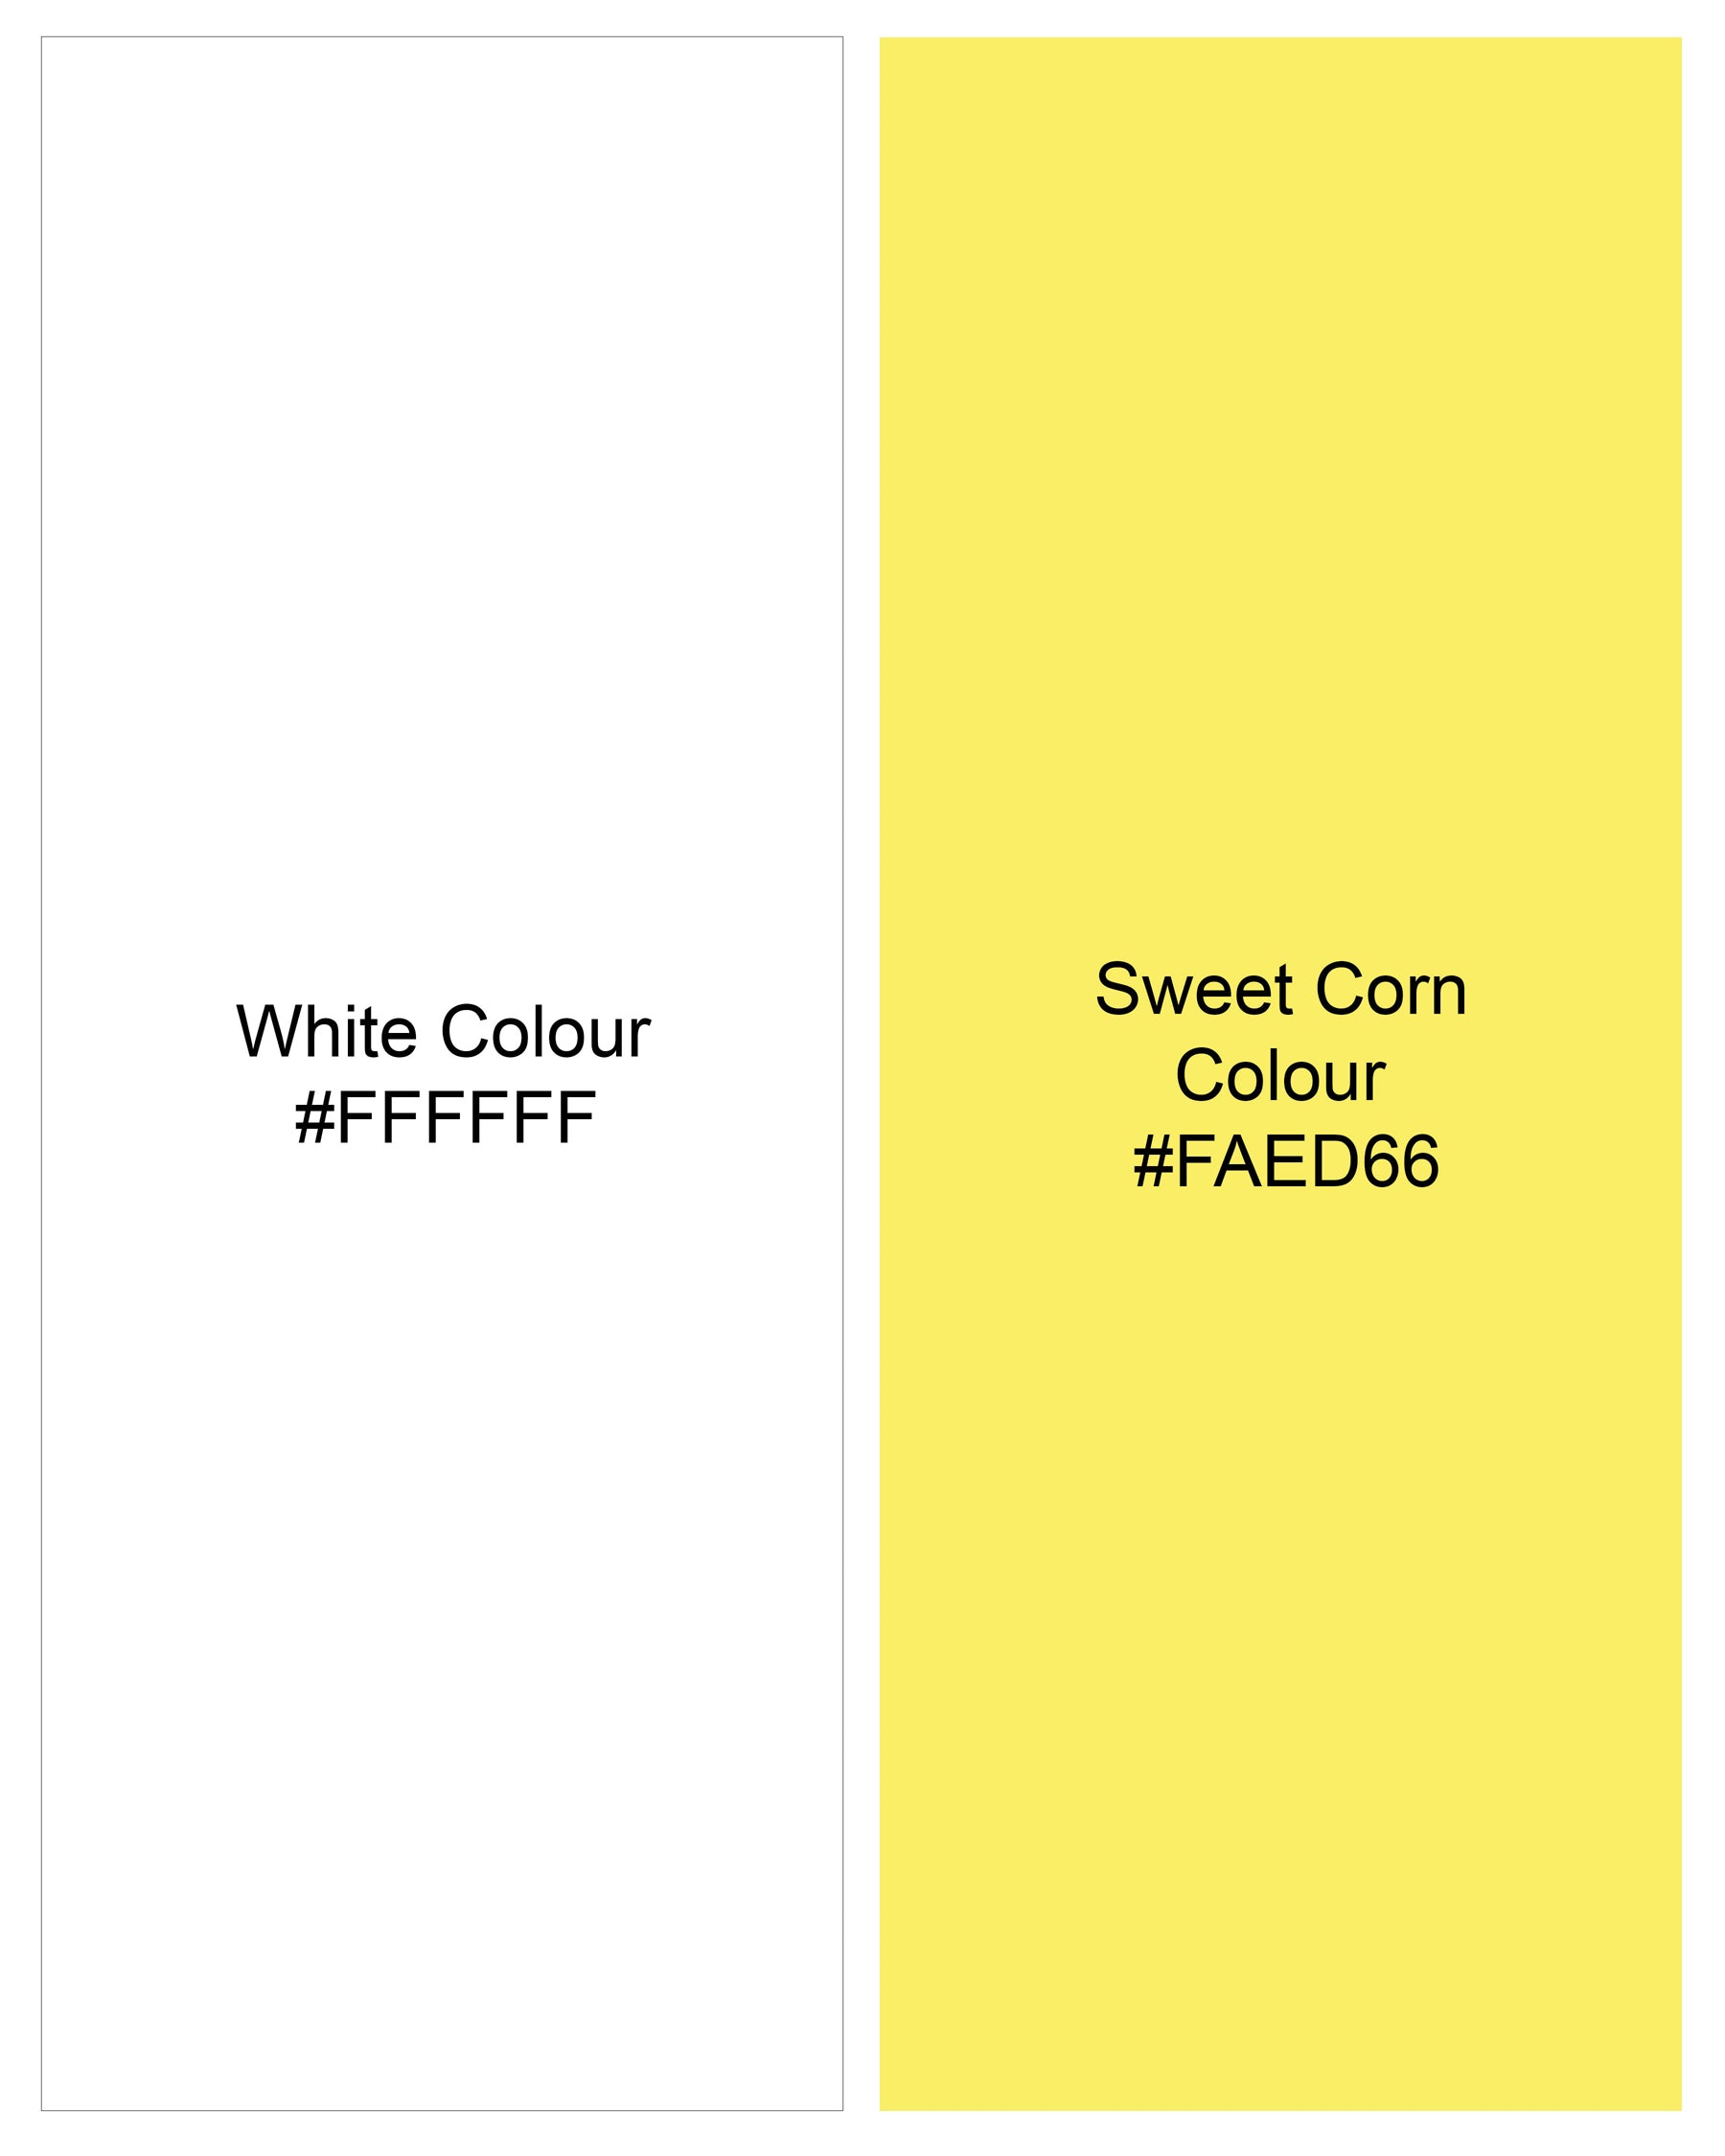 Bright White with Sweet Corn Shibori Printed Super Soft Premium Cotton Women’s Shirt WS065-32, WS065-34, WS065-36, WS065-38, WS065-40, WS065-42